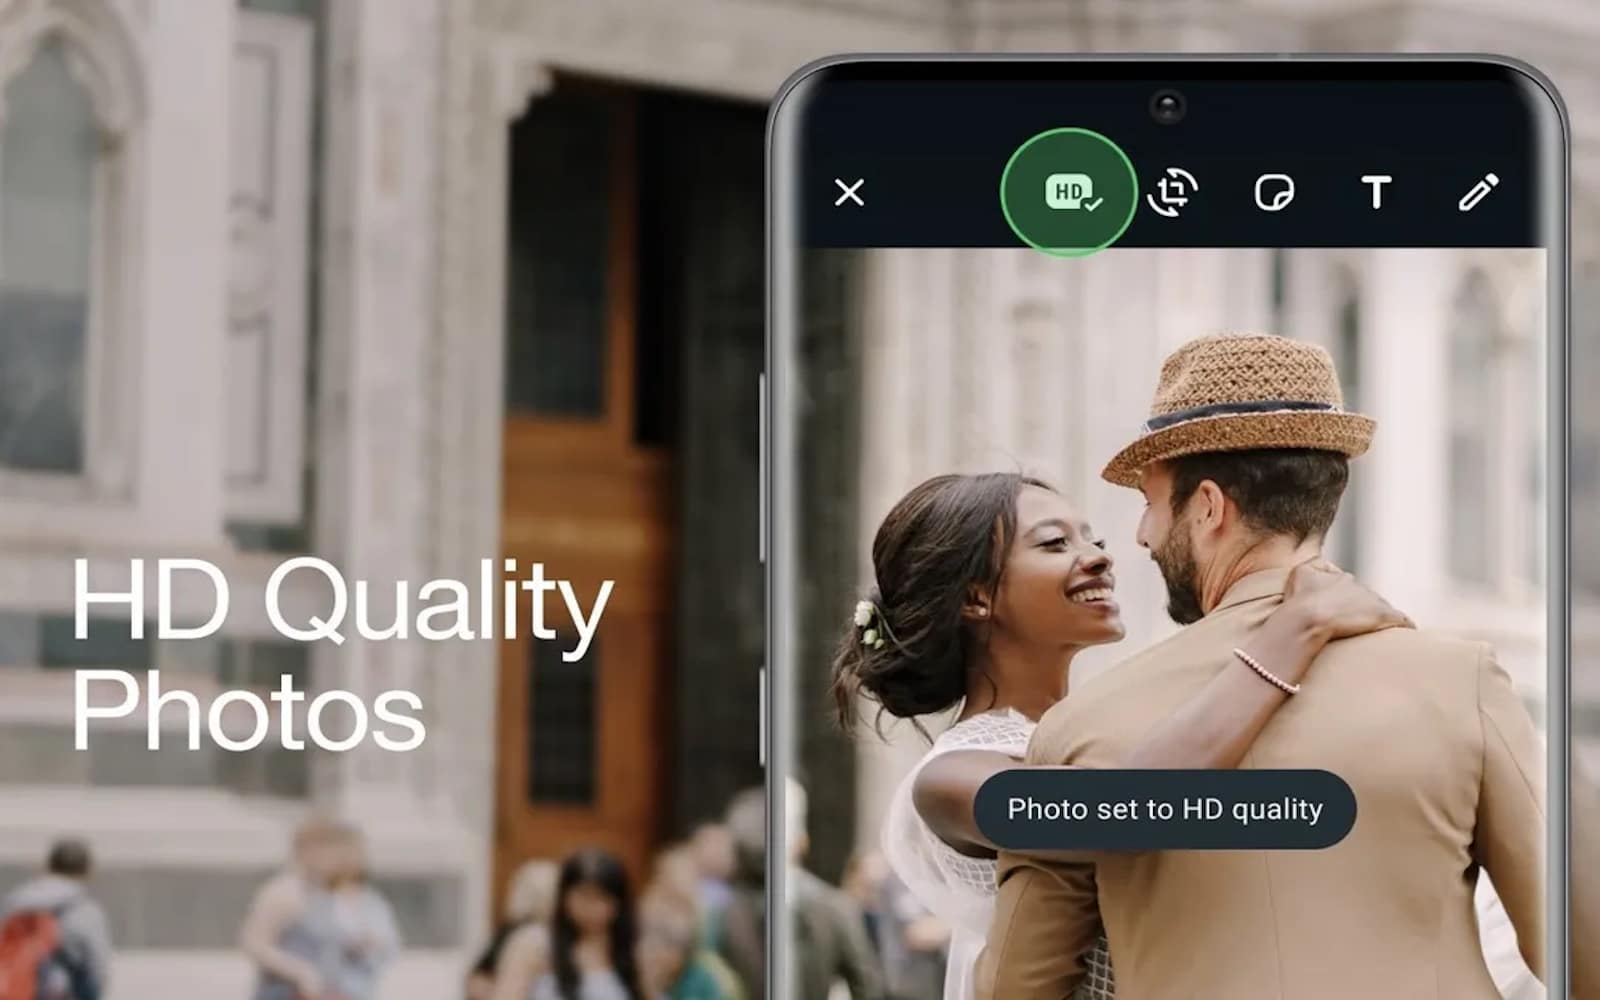 WhatsApp iOS introduces new HD button